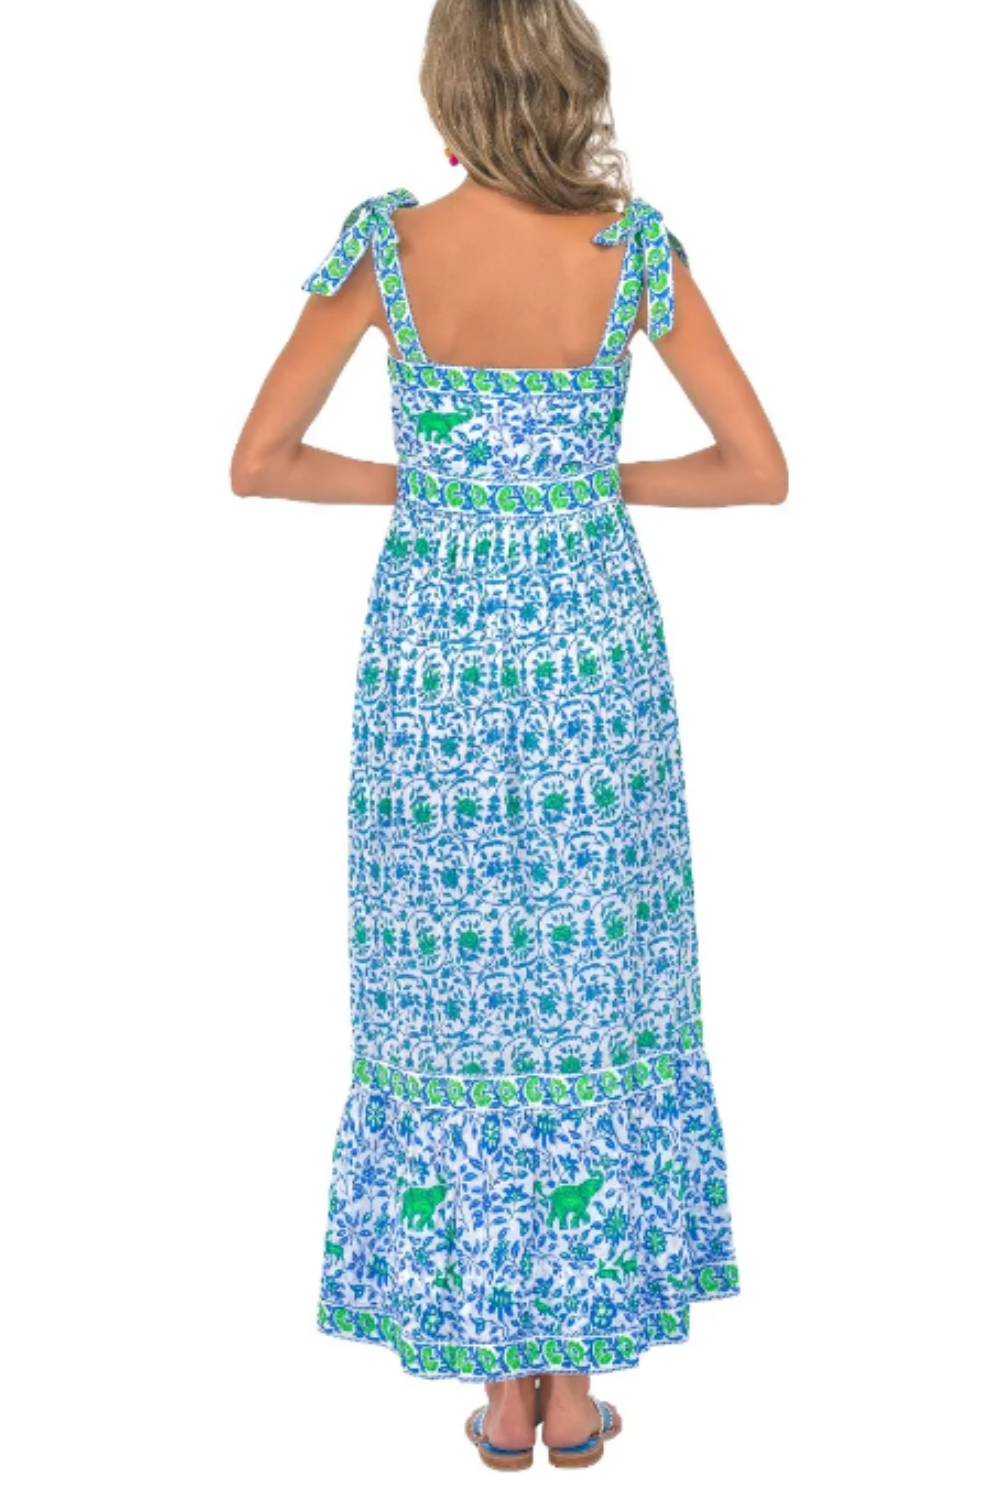 Gretchen Scott Samaode East India Dress-  Blue/Kelly